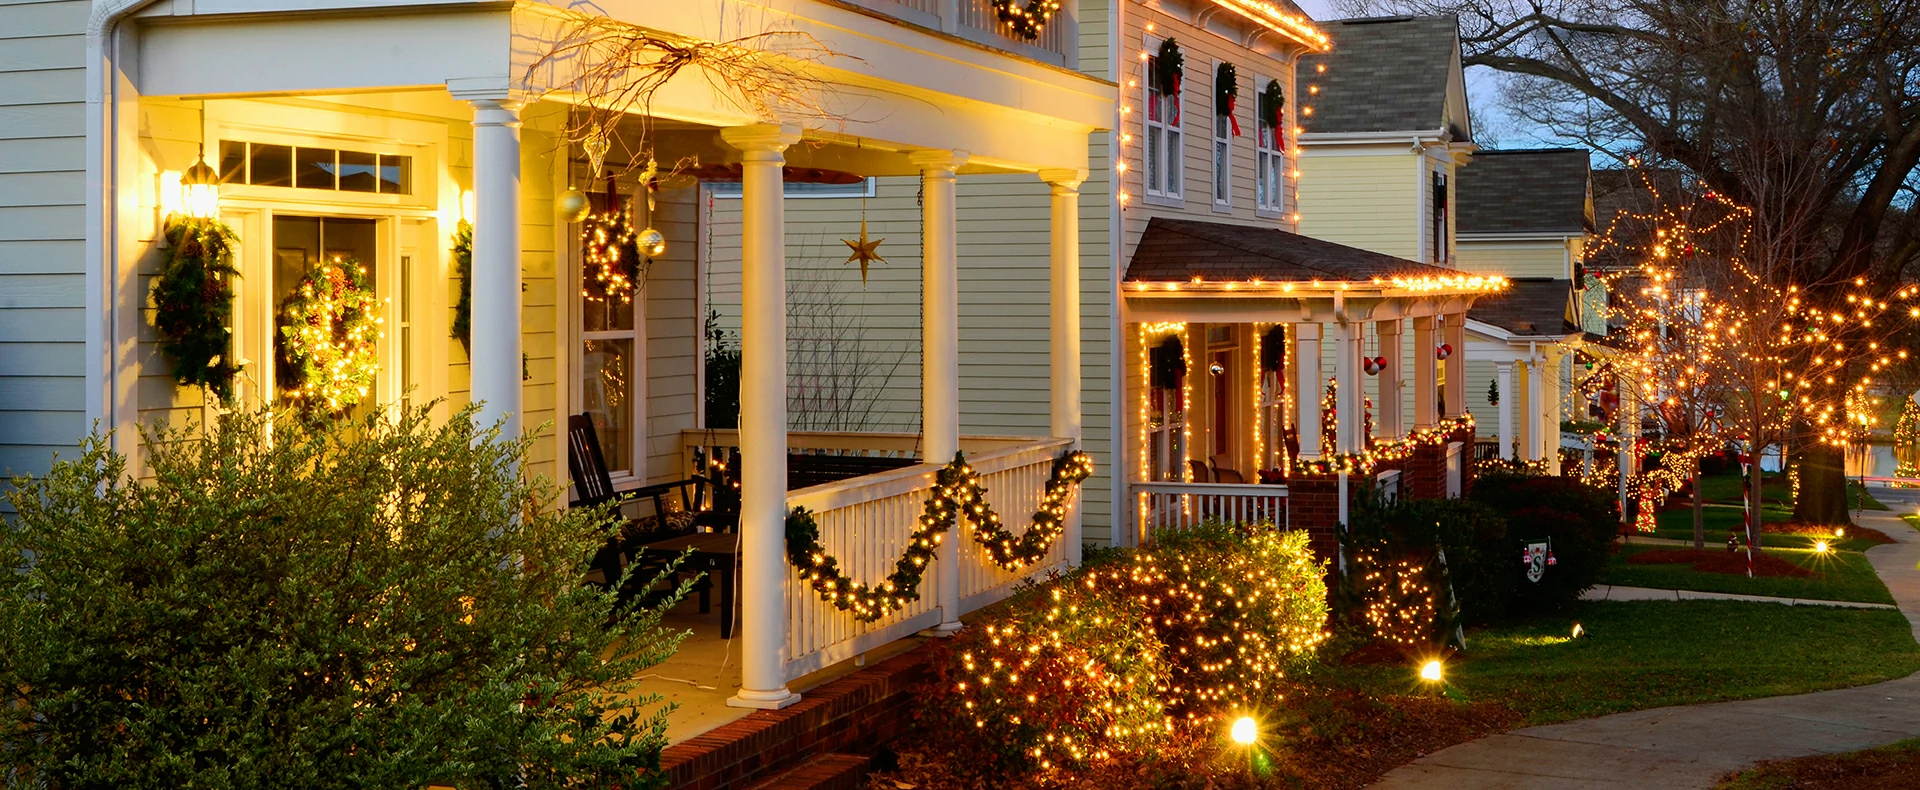 Moobibear Fairy Lights Decor Your Home and Life!